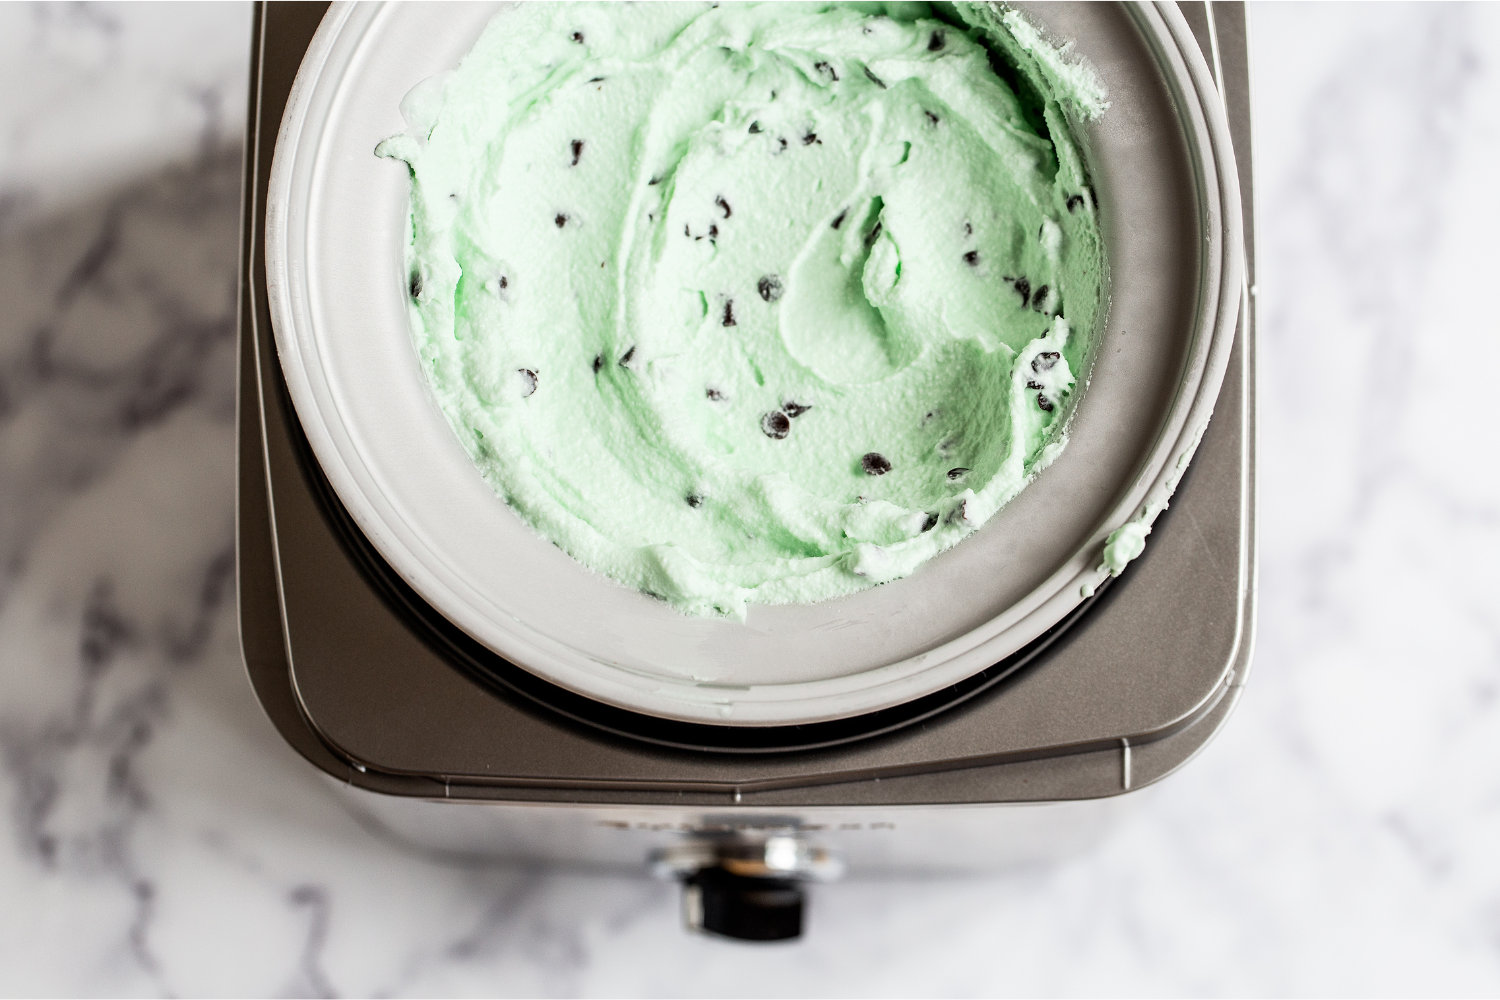 ice cream churning in an ice cream machine.